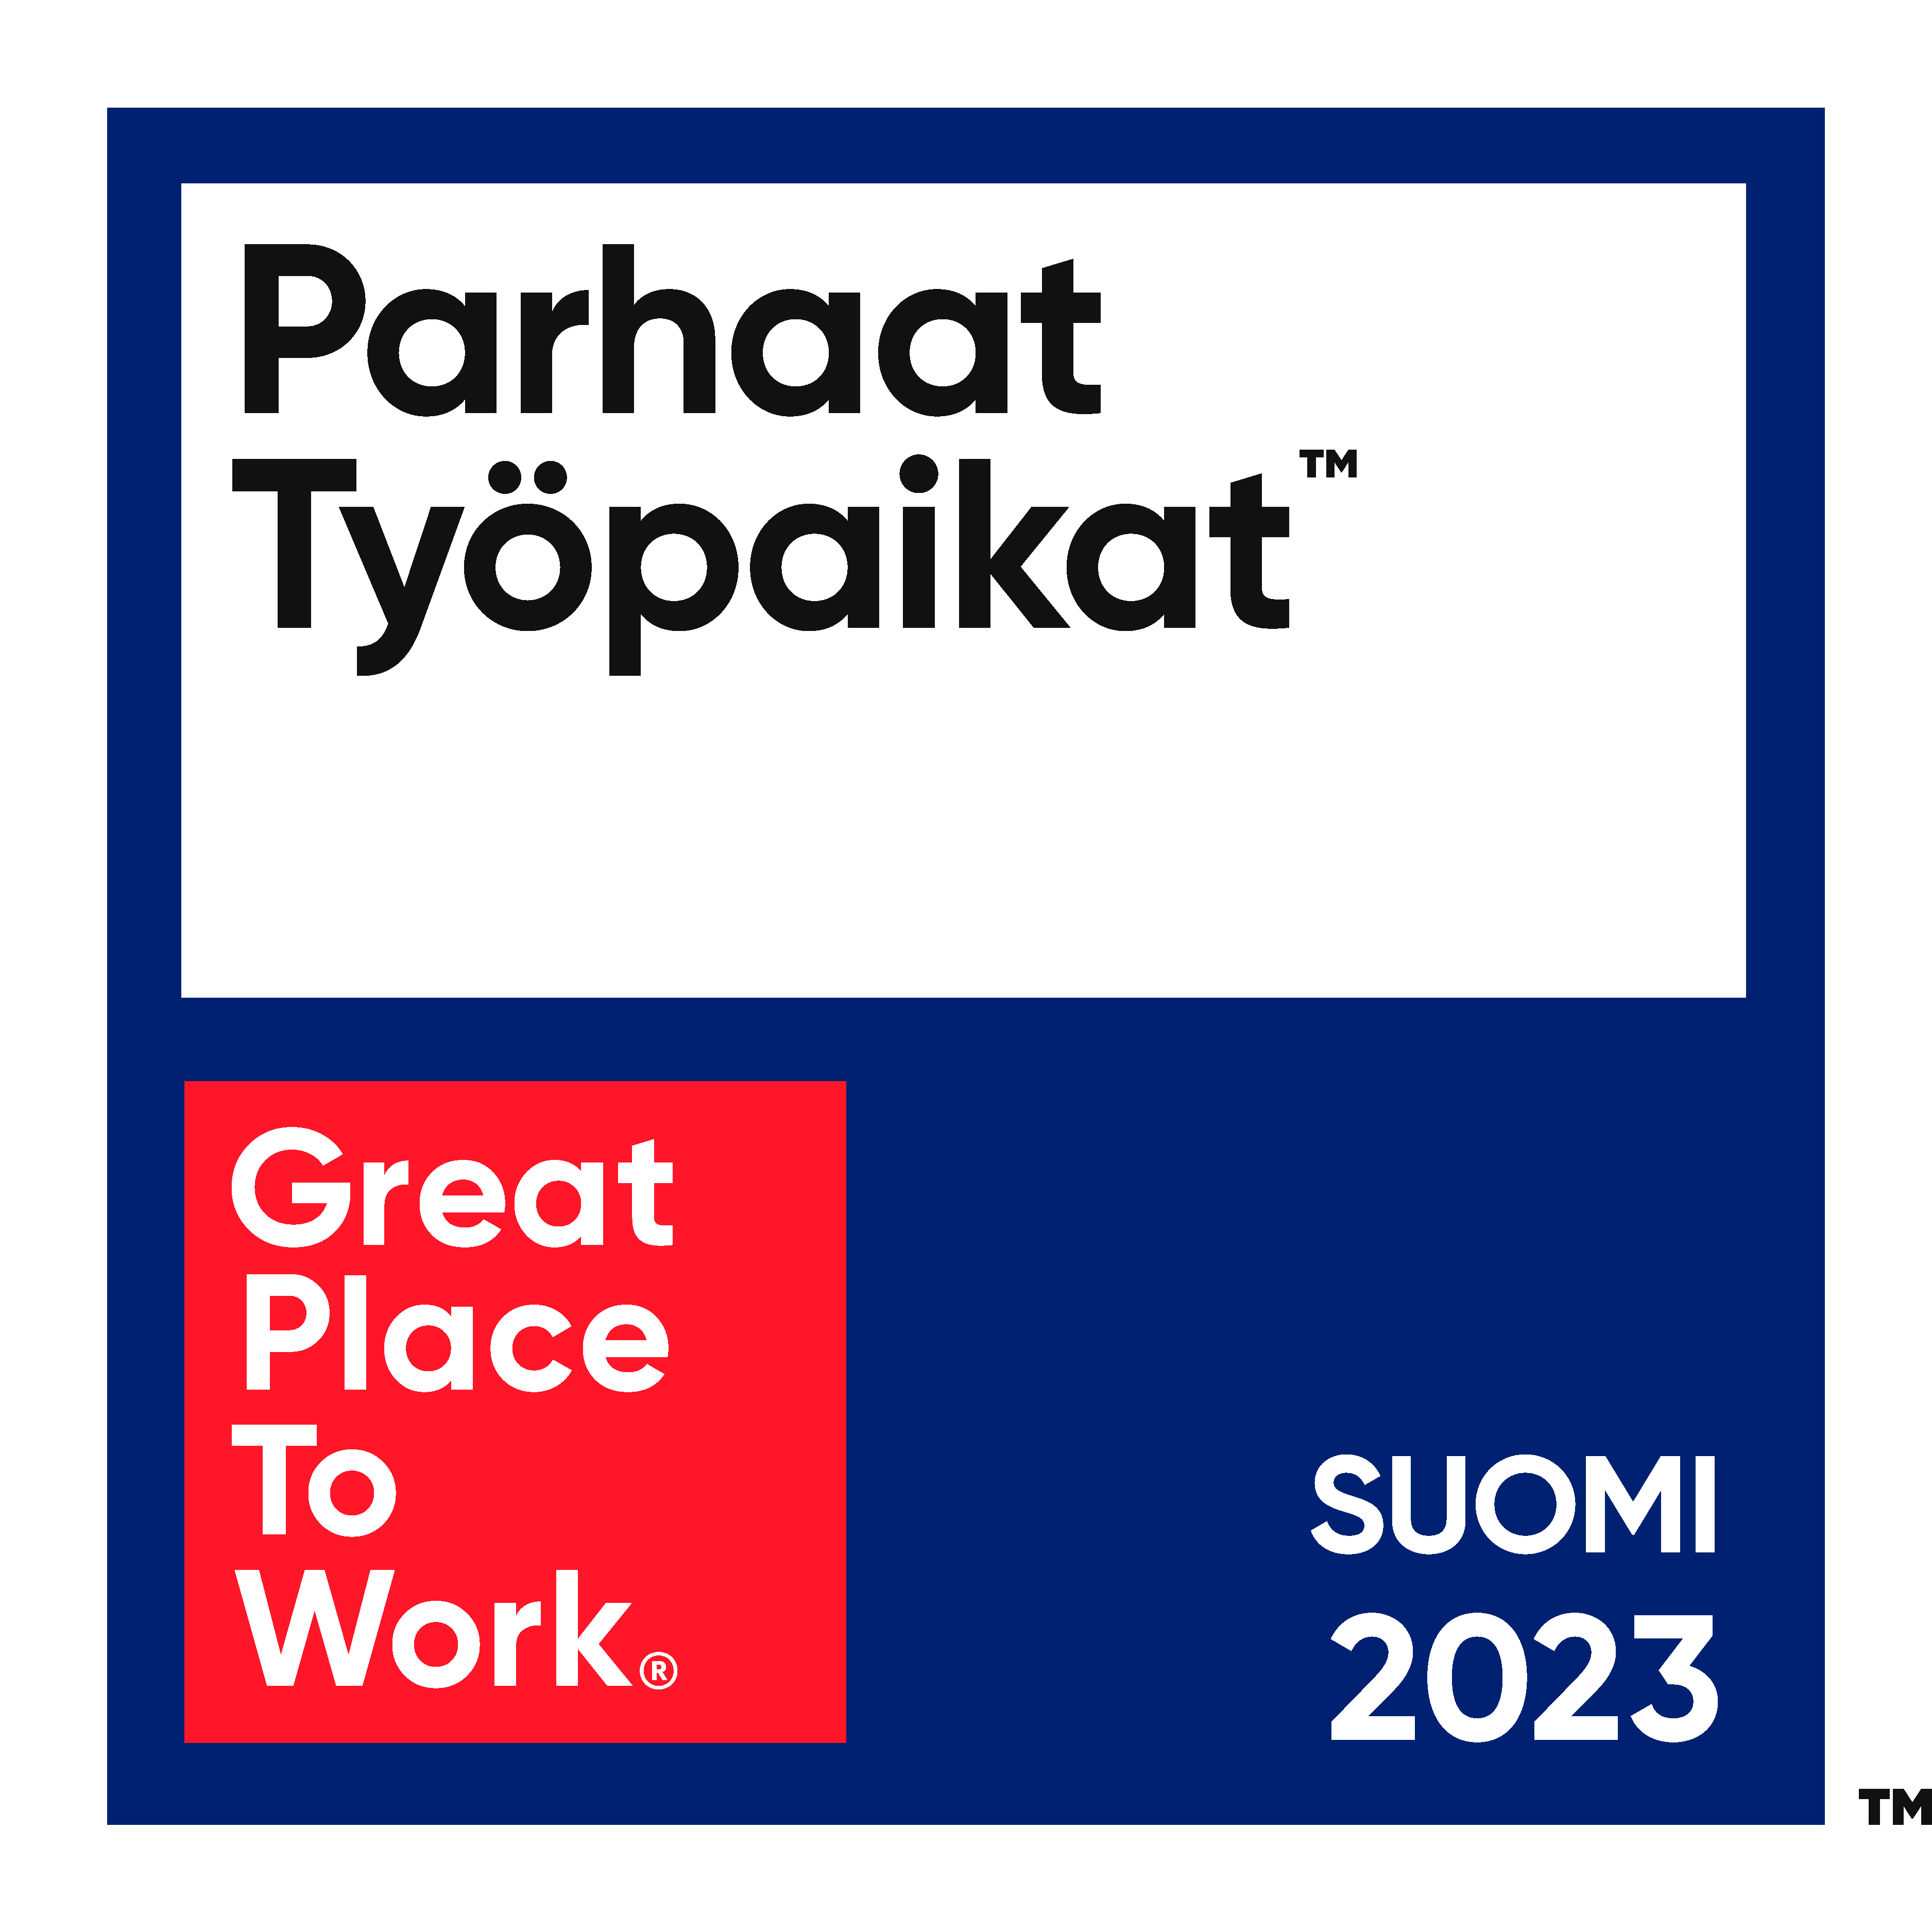 2023_Suomi_Parhaat Ty”paikat